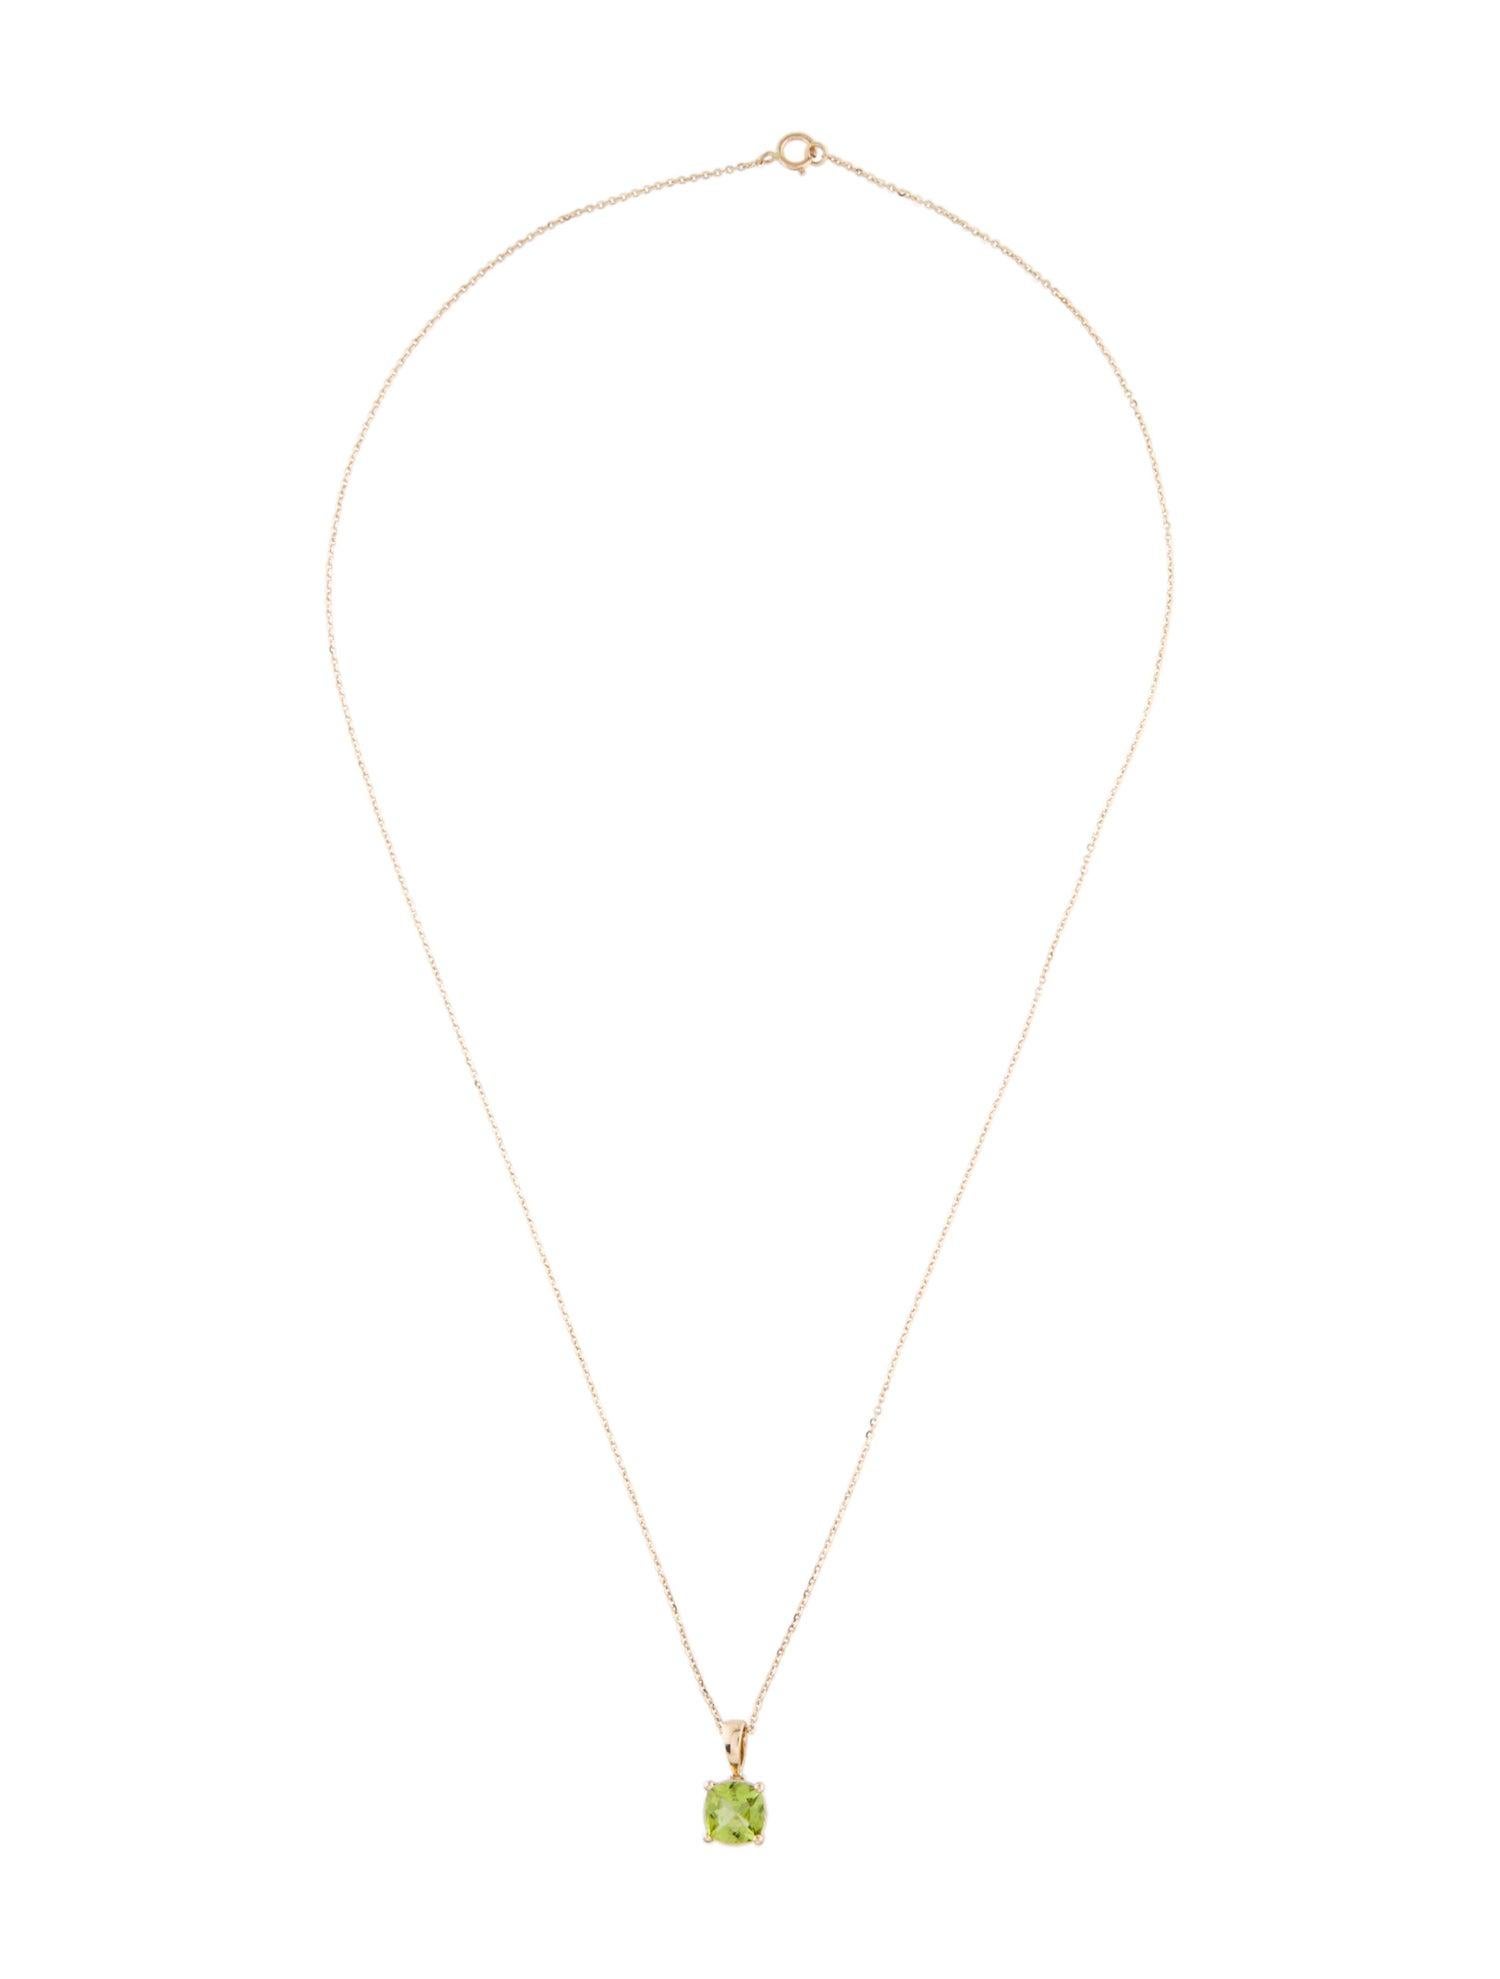 Women's Luxury 14K Peridot Pendant Necklace  1.23ct Gemstone  Elegant Jewelry For Sale